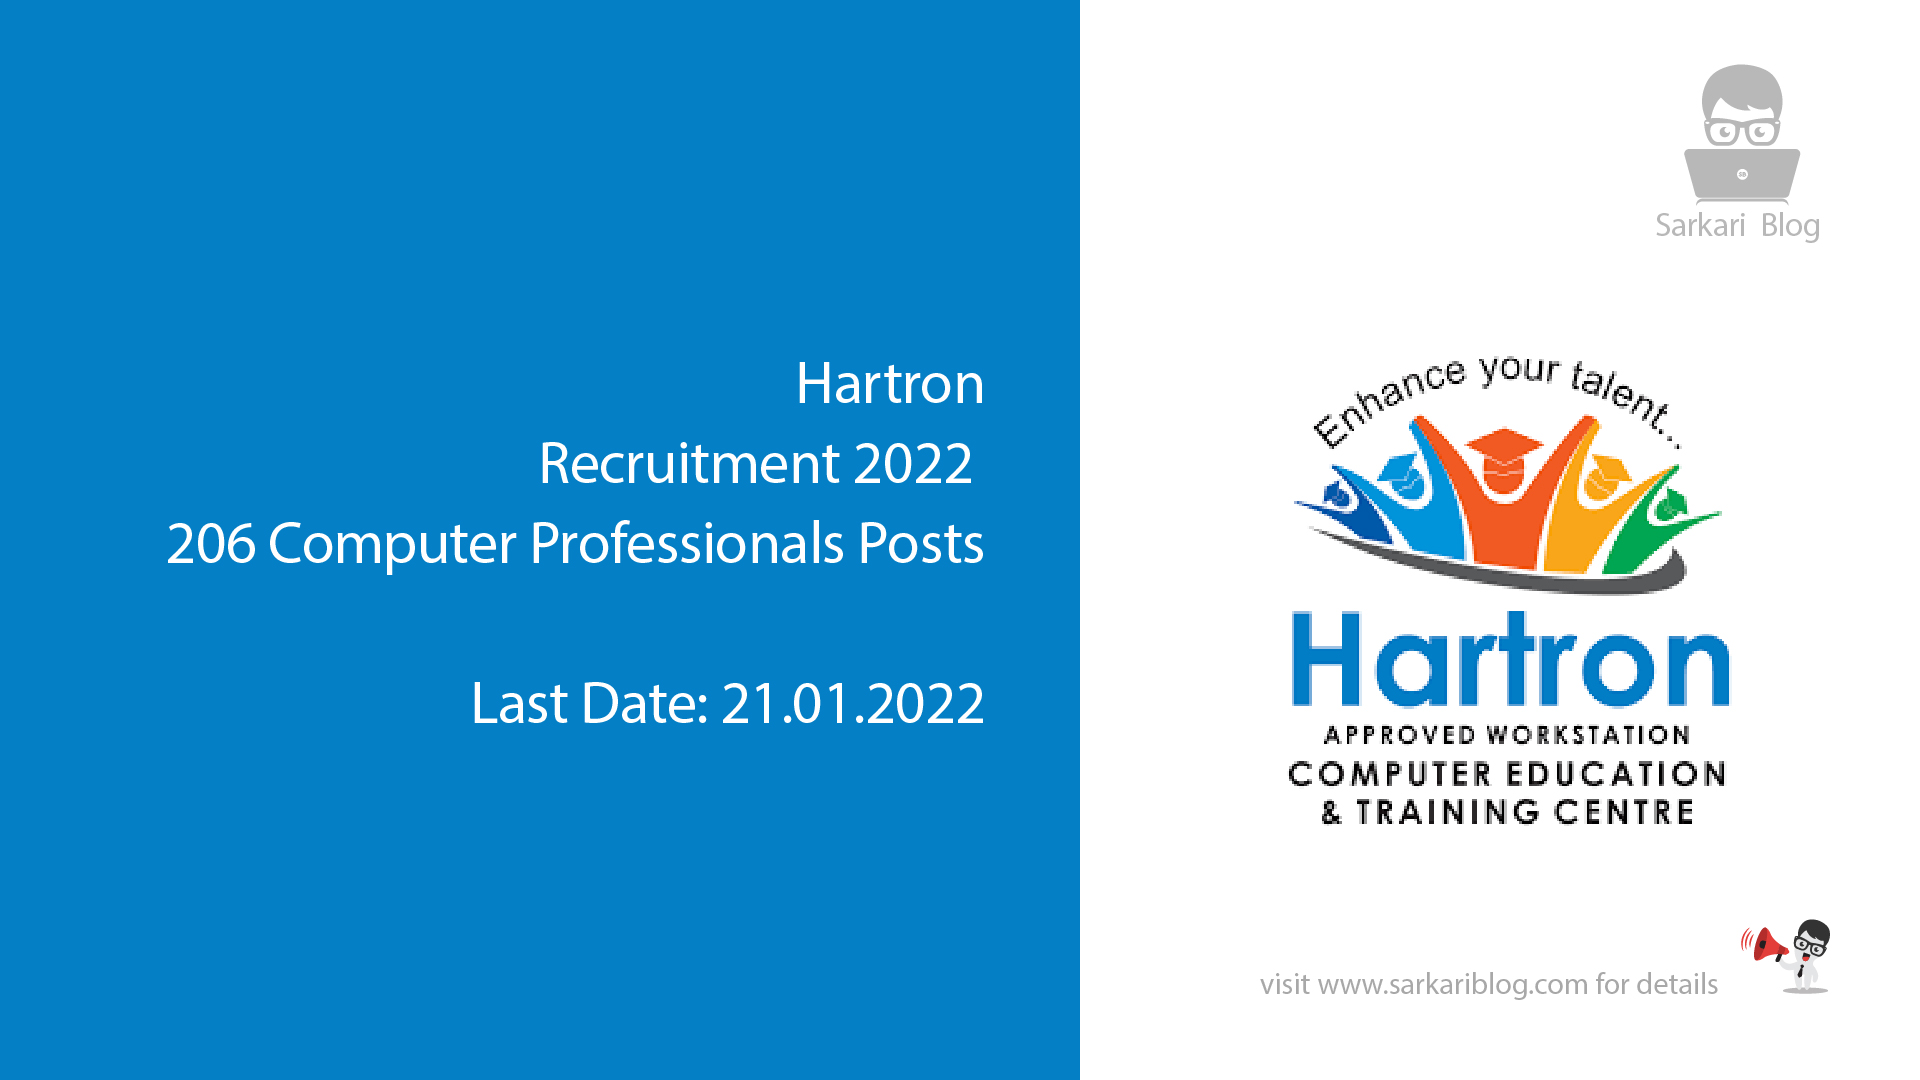 Hartron Recruitment 2022